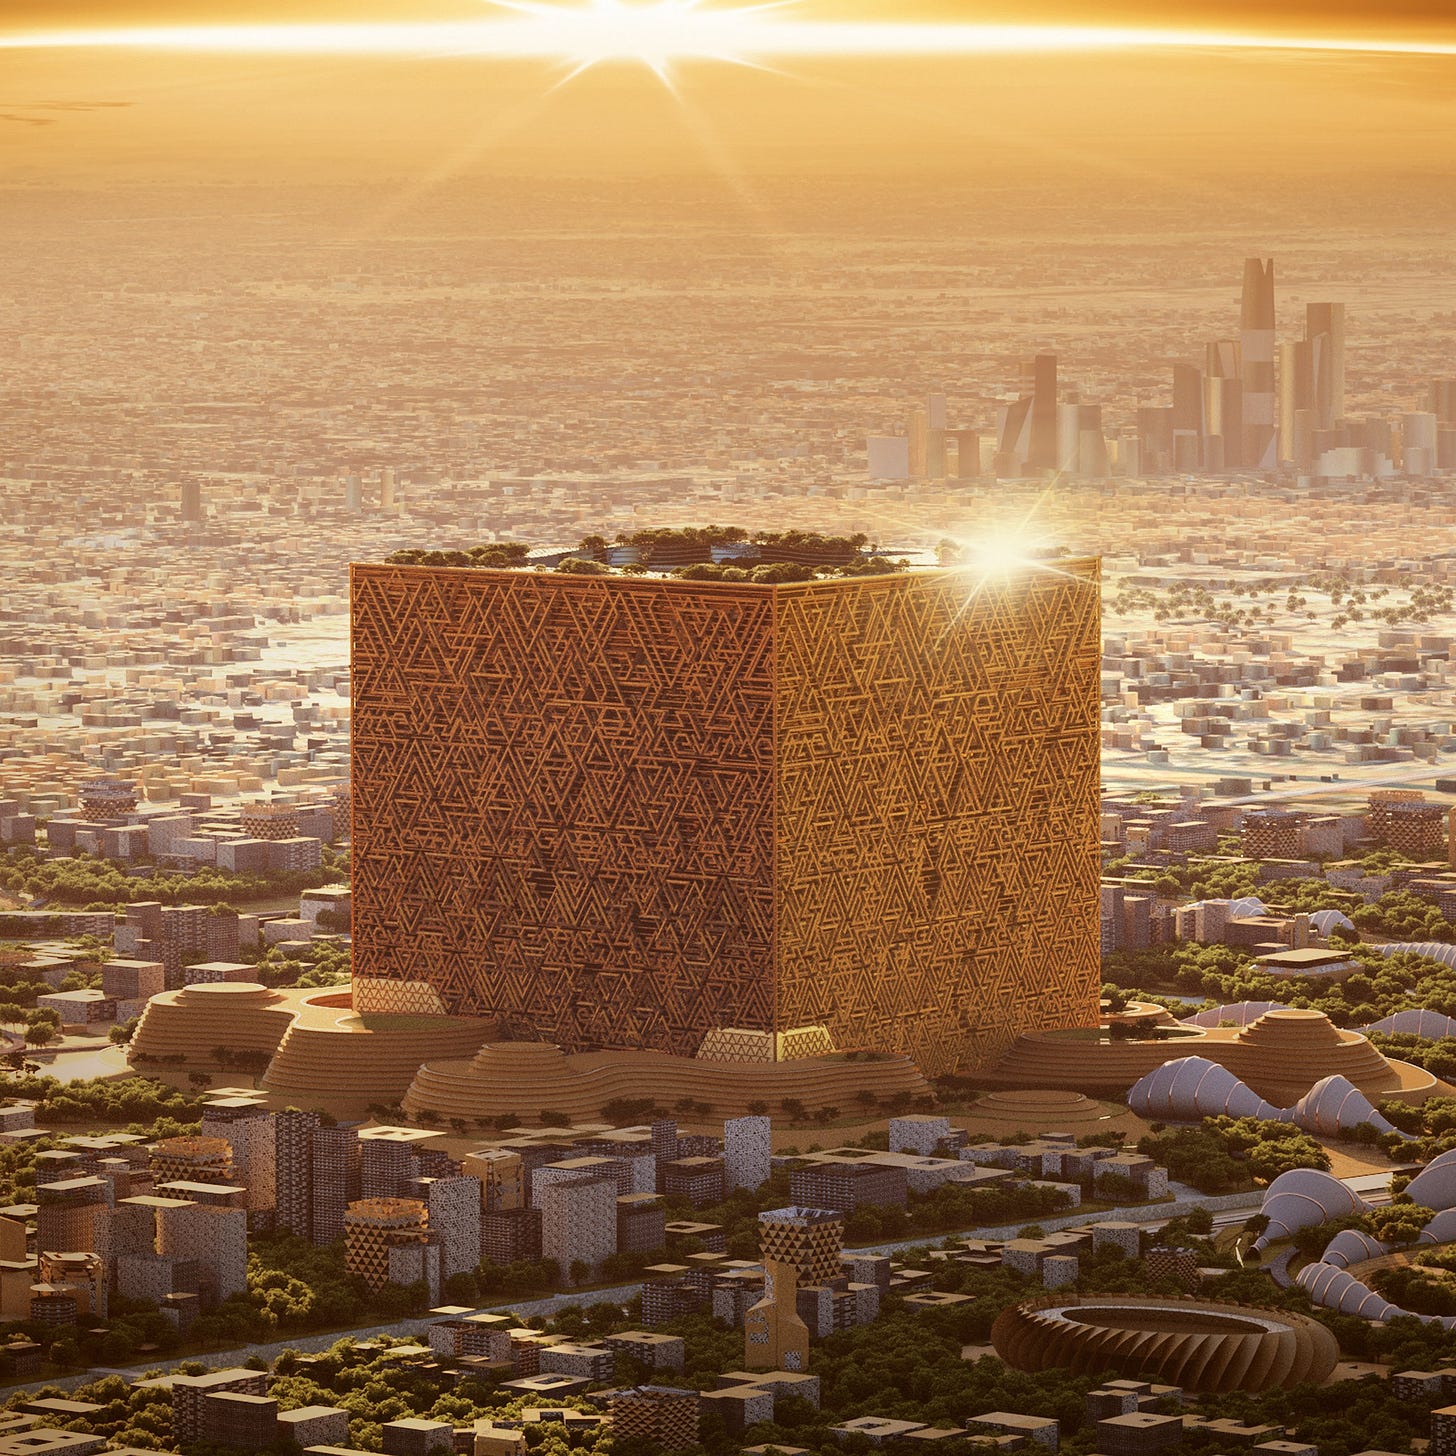 Saudi Arabia unveils giant cube-shaped supertall skyscraper in Riyadh